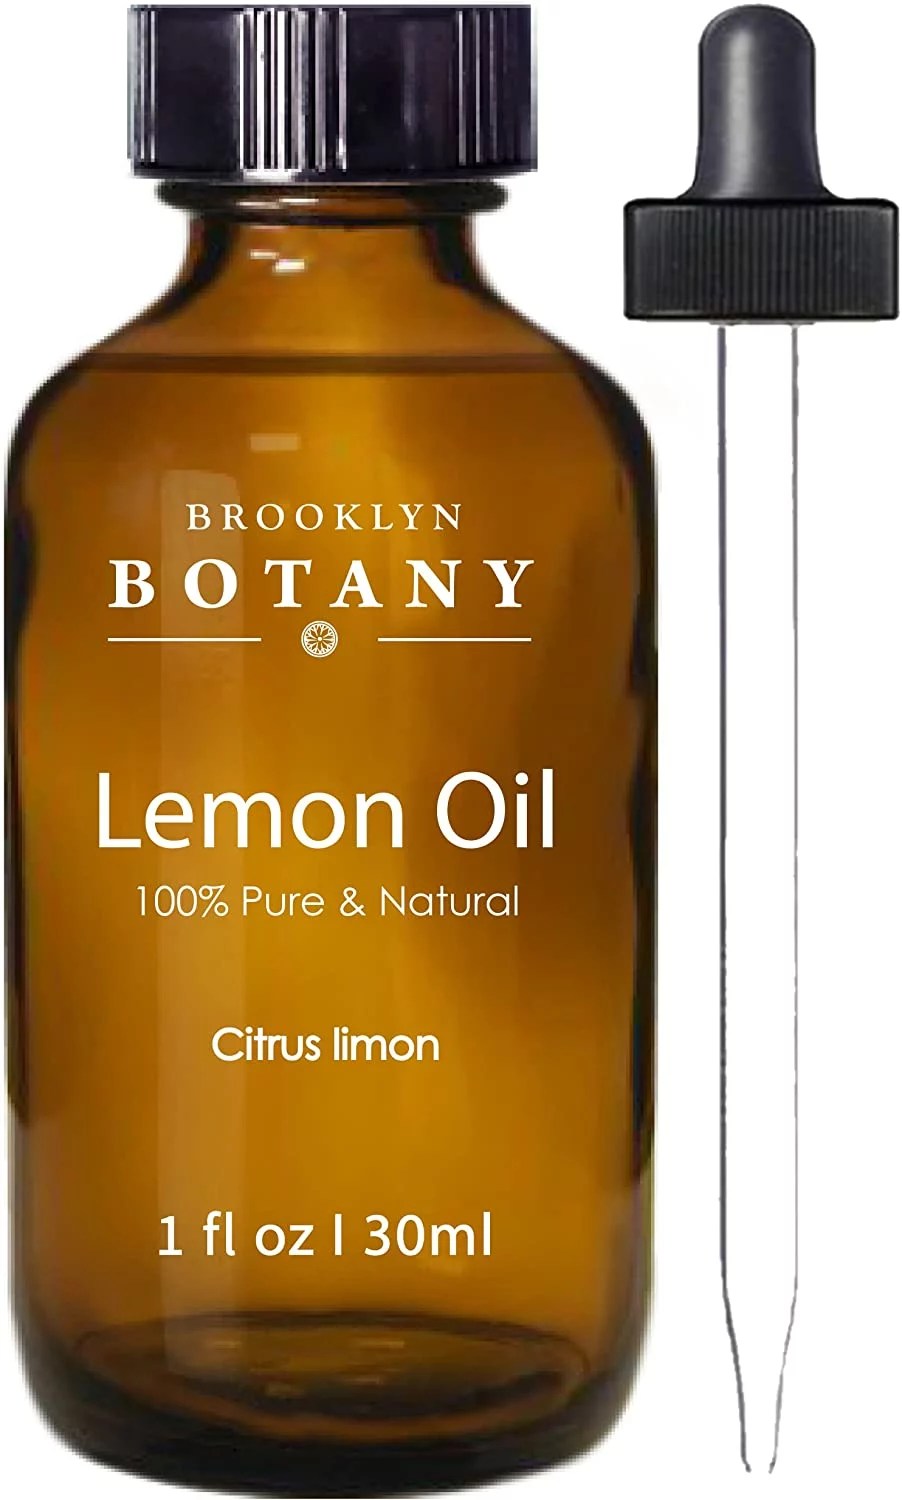 A bottle of lemon essential oil.